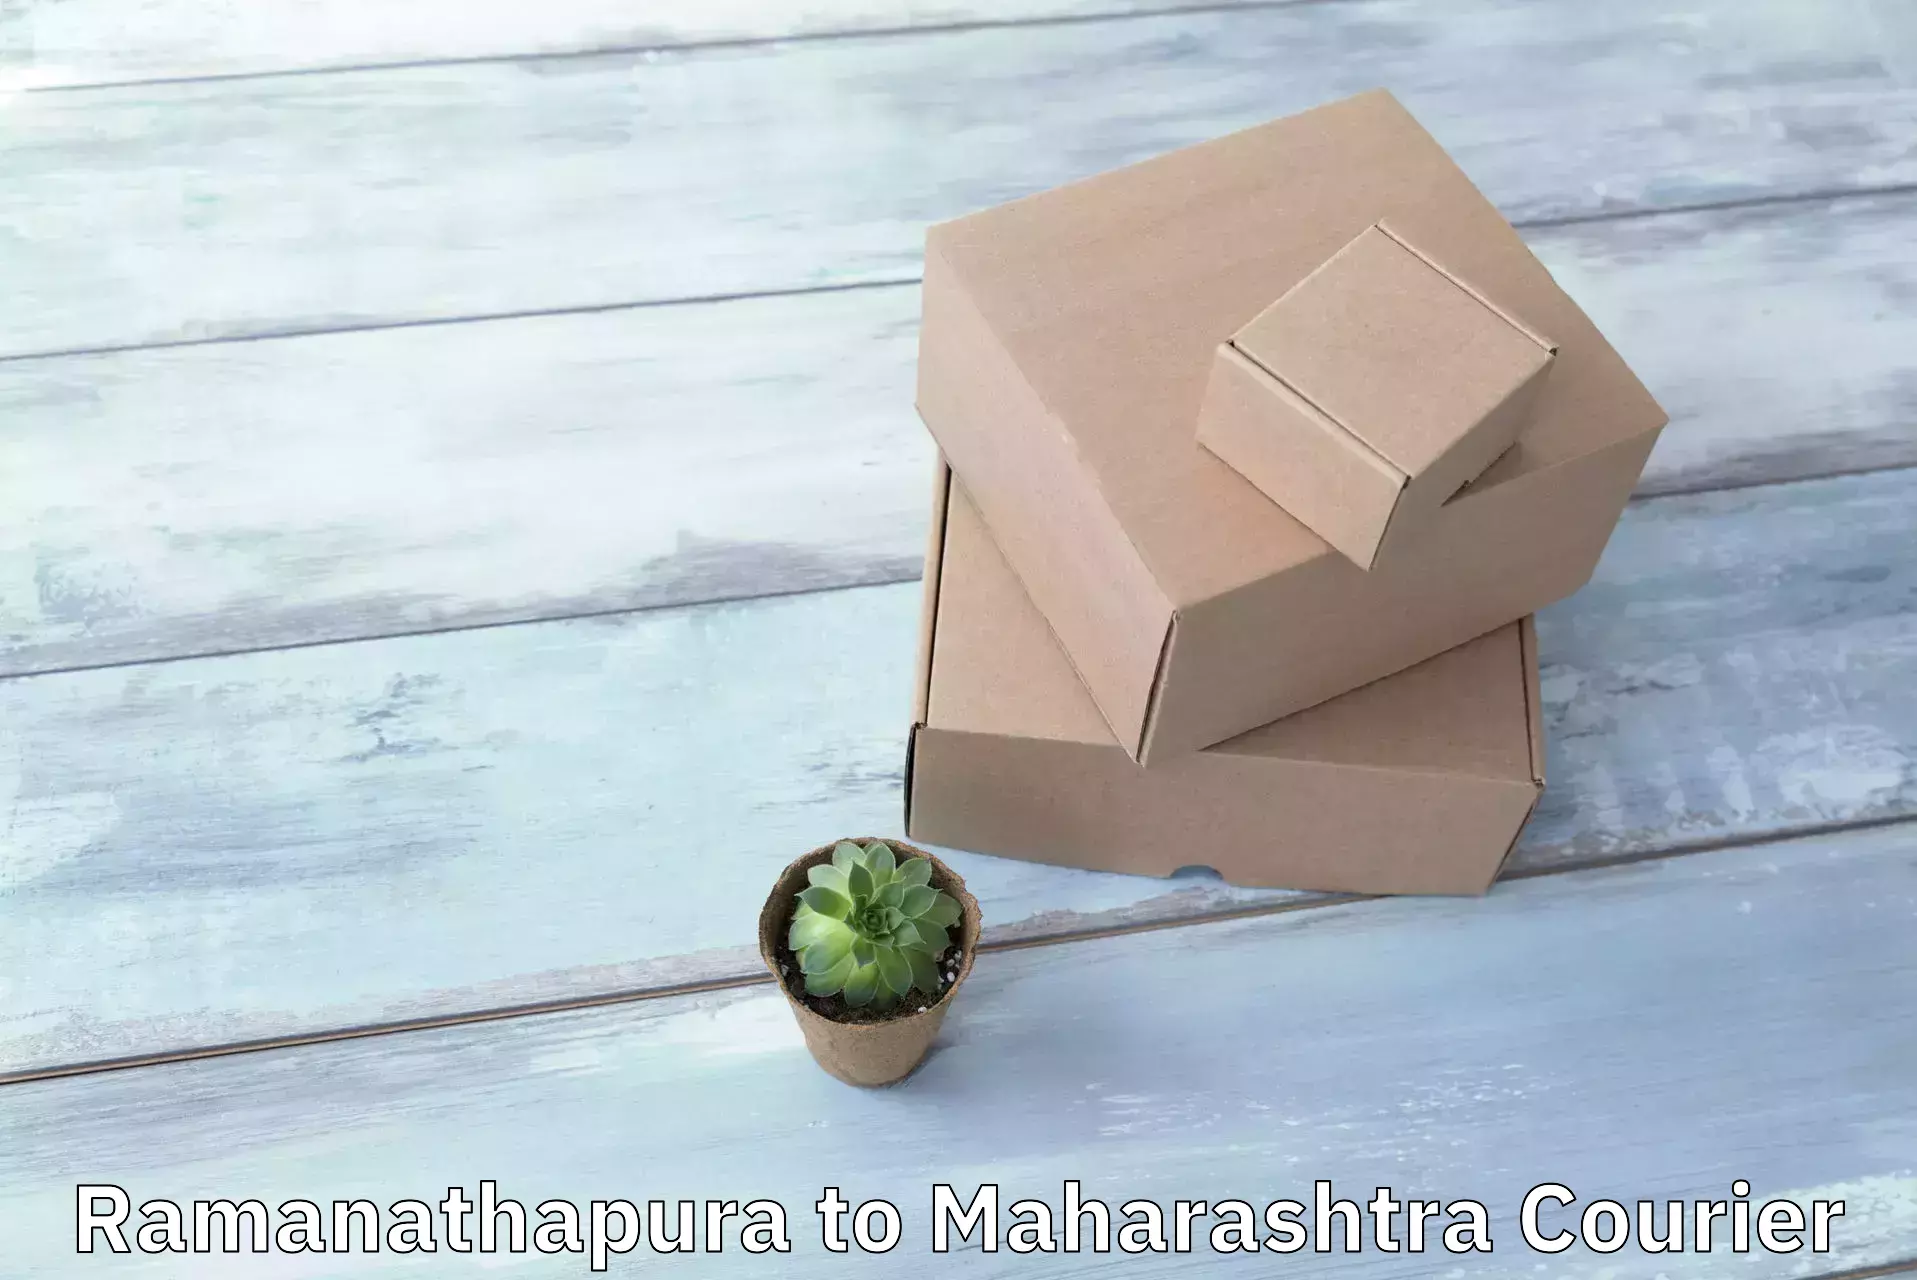 High value parcel delivery Ramanathapura to Khandala Pune